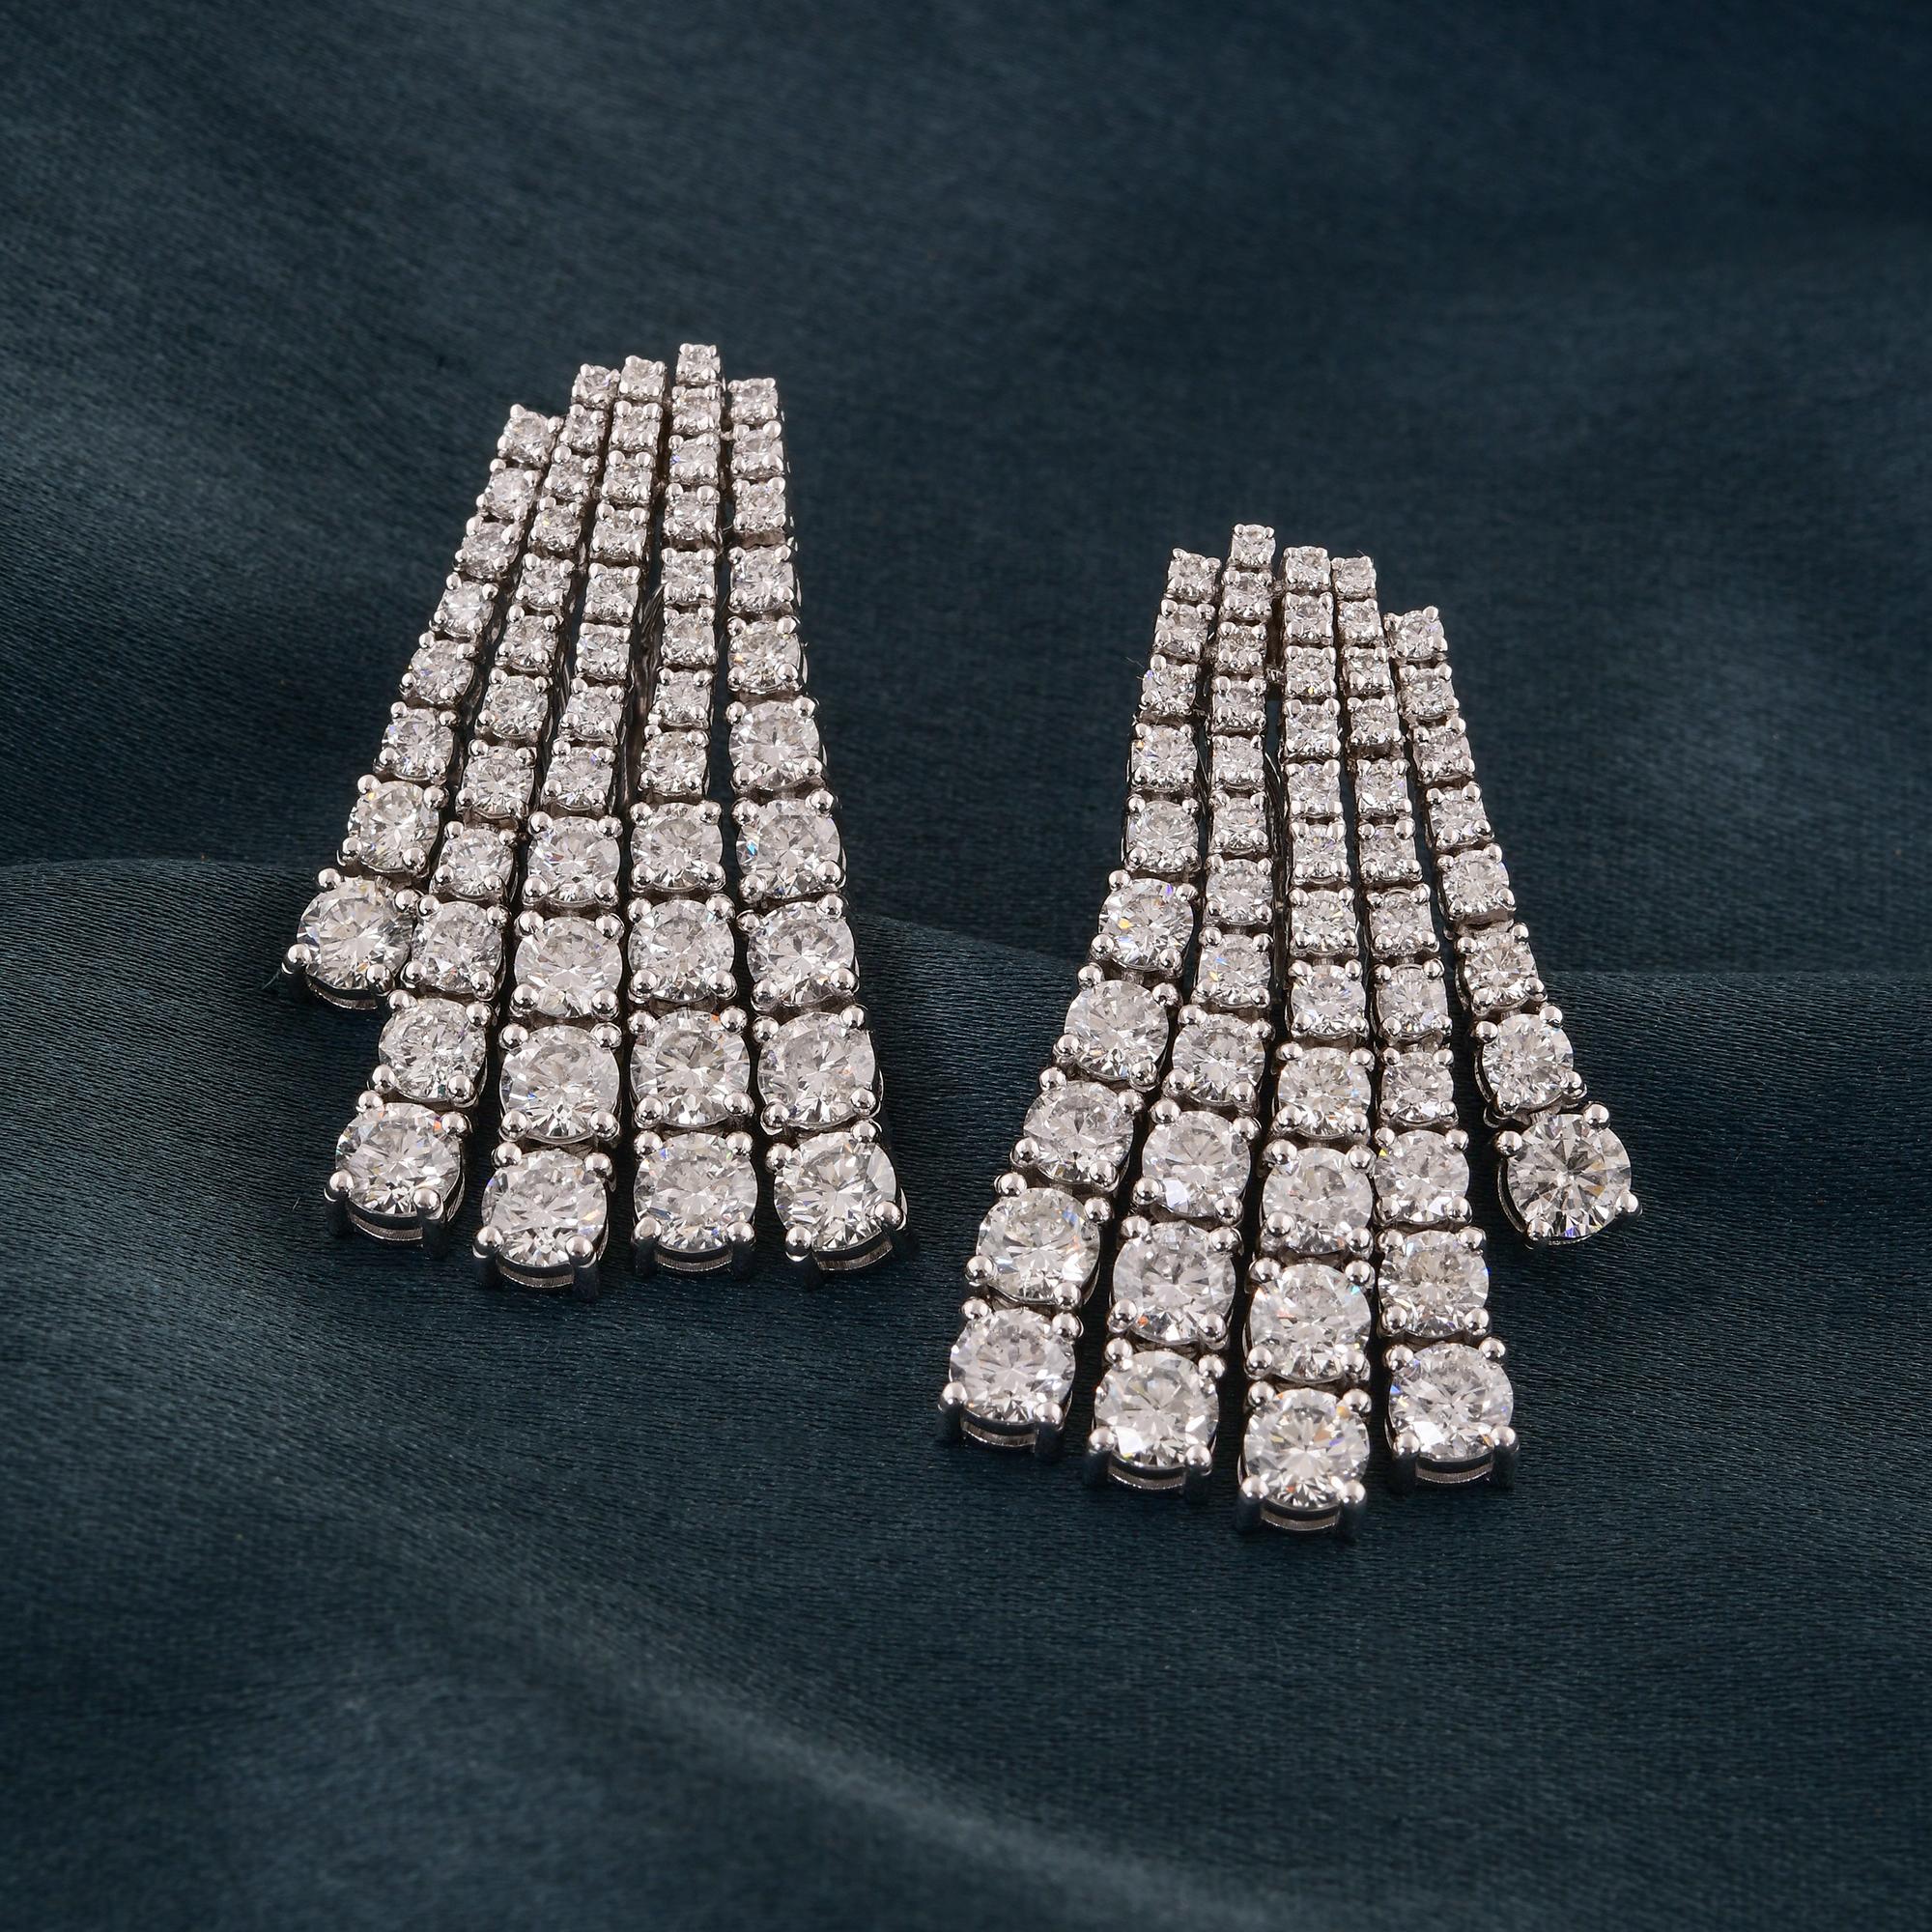 Round Cut Real 8.8 Carat Multi Layer Diamond Earrings 14 Karat White Gold Handmade Jewelry For Sale